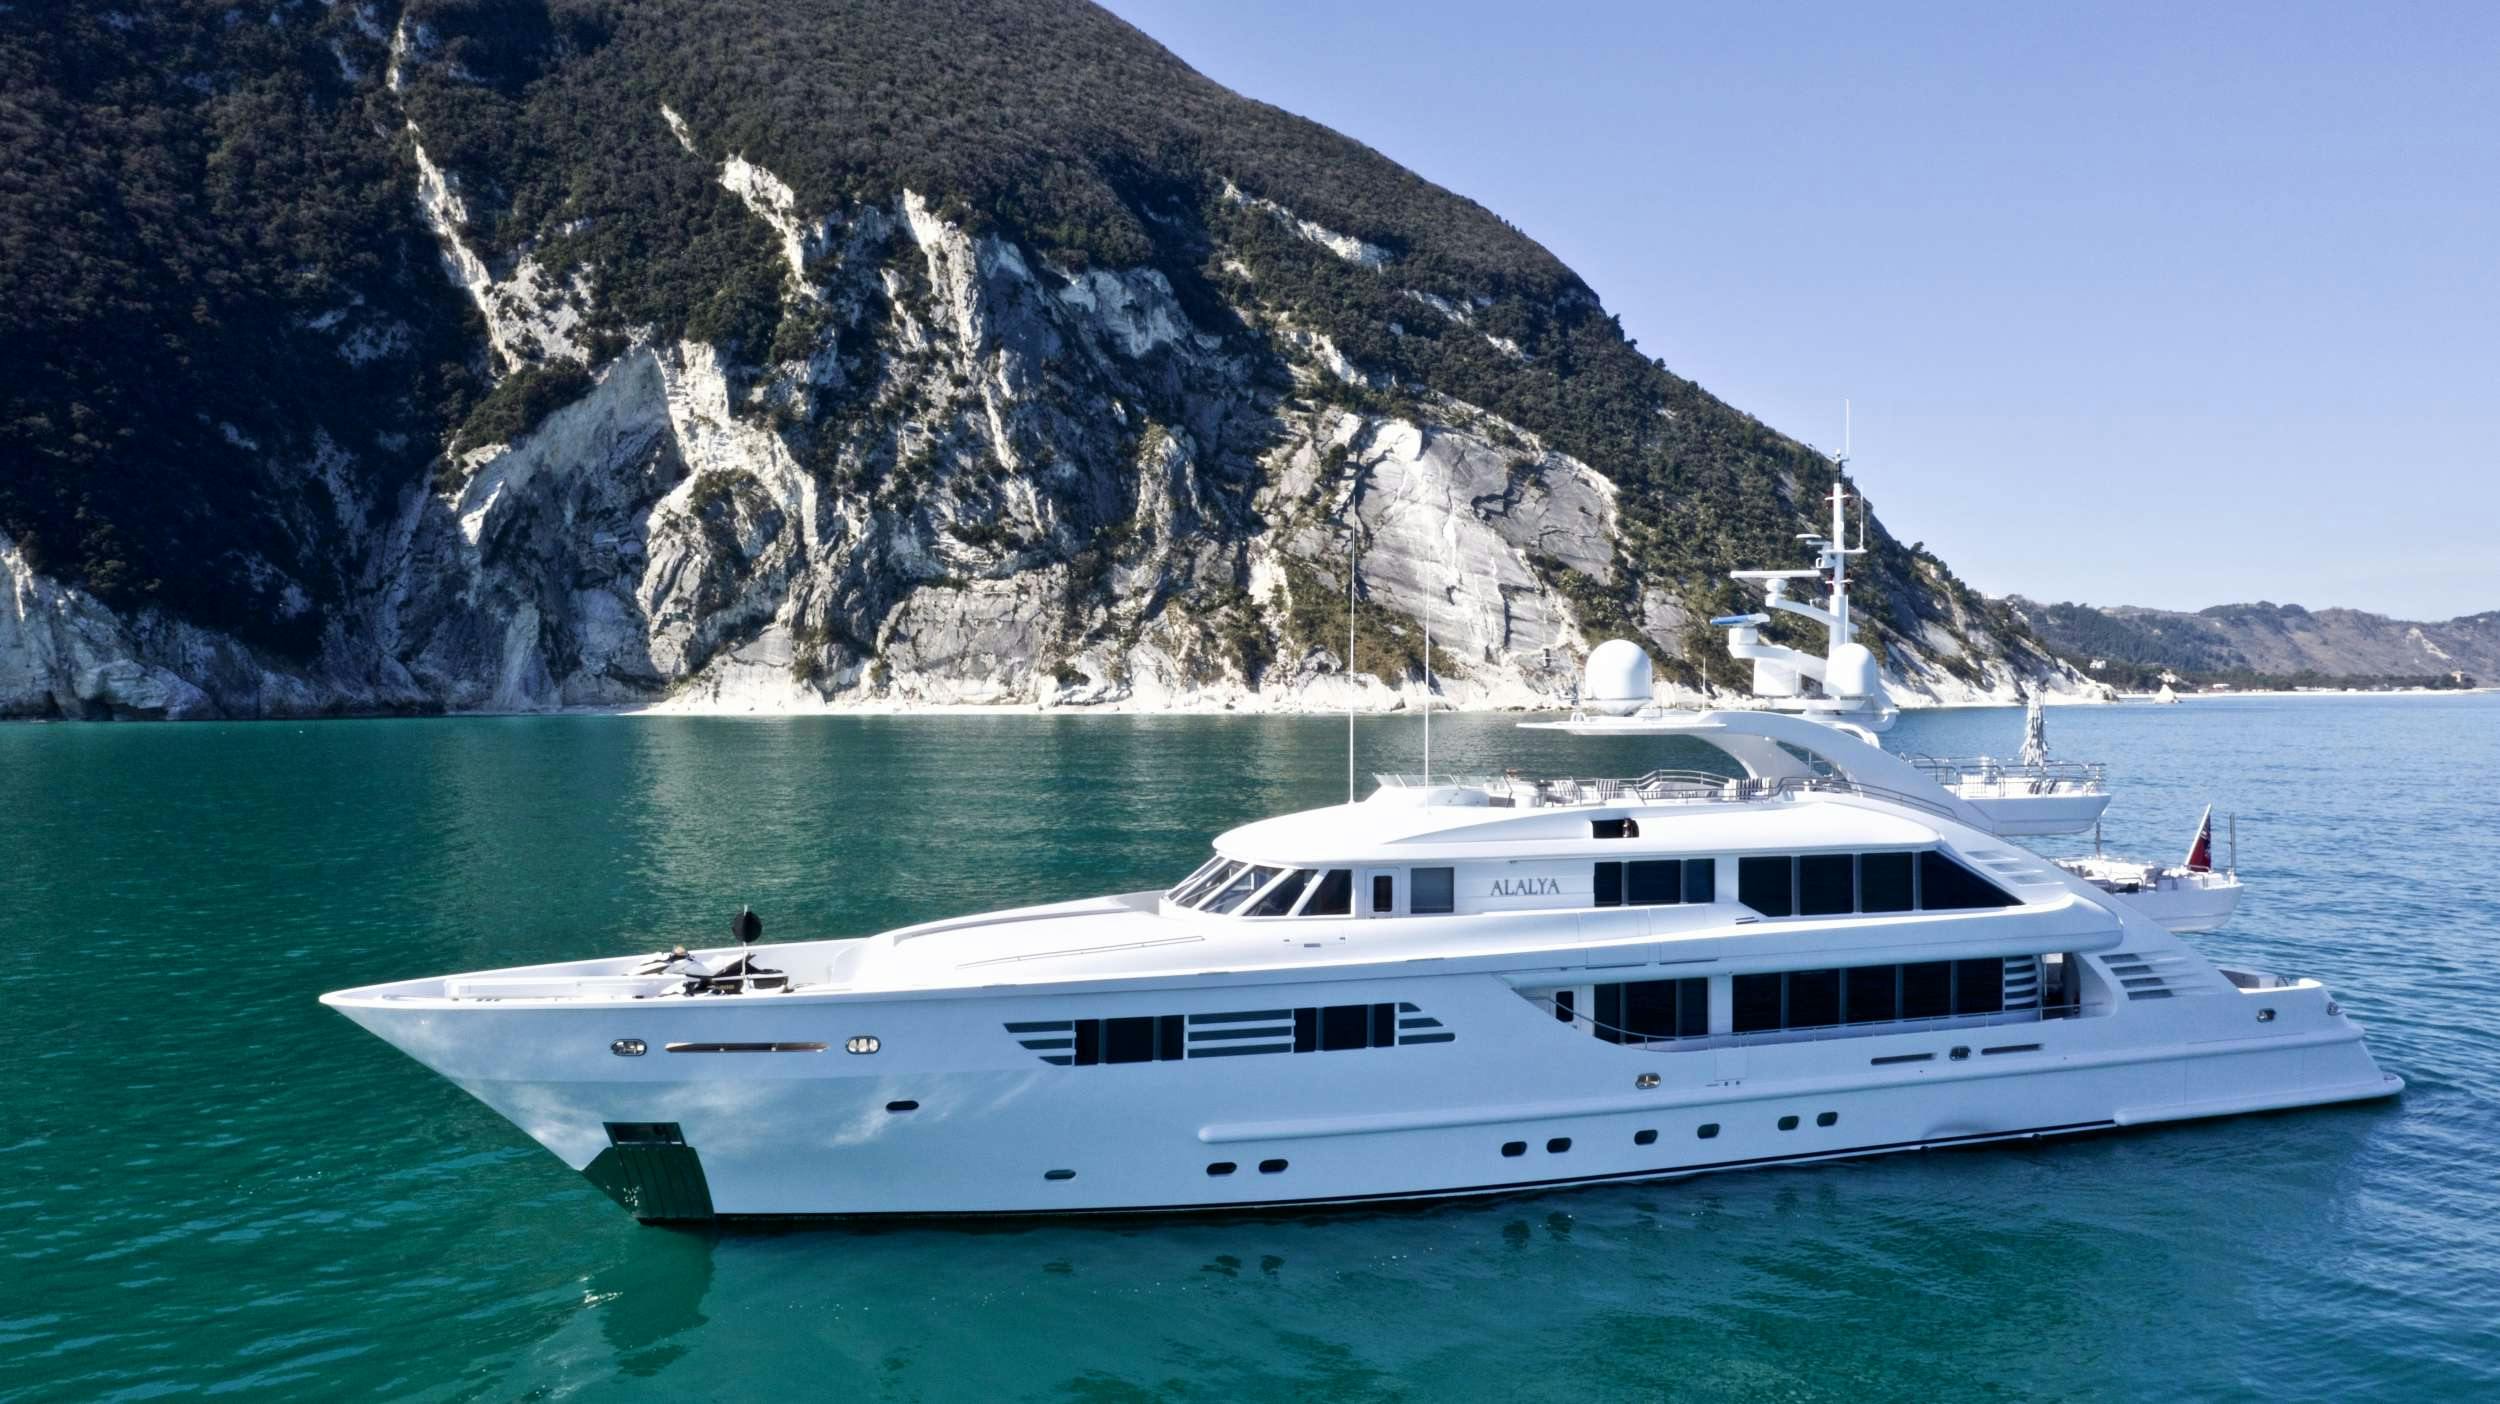 ALALYA - Yacht Charter France & Boat hire in Riviera, Cors, Sard, Italy, Spain, Turkey, Croatia, Greece 1